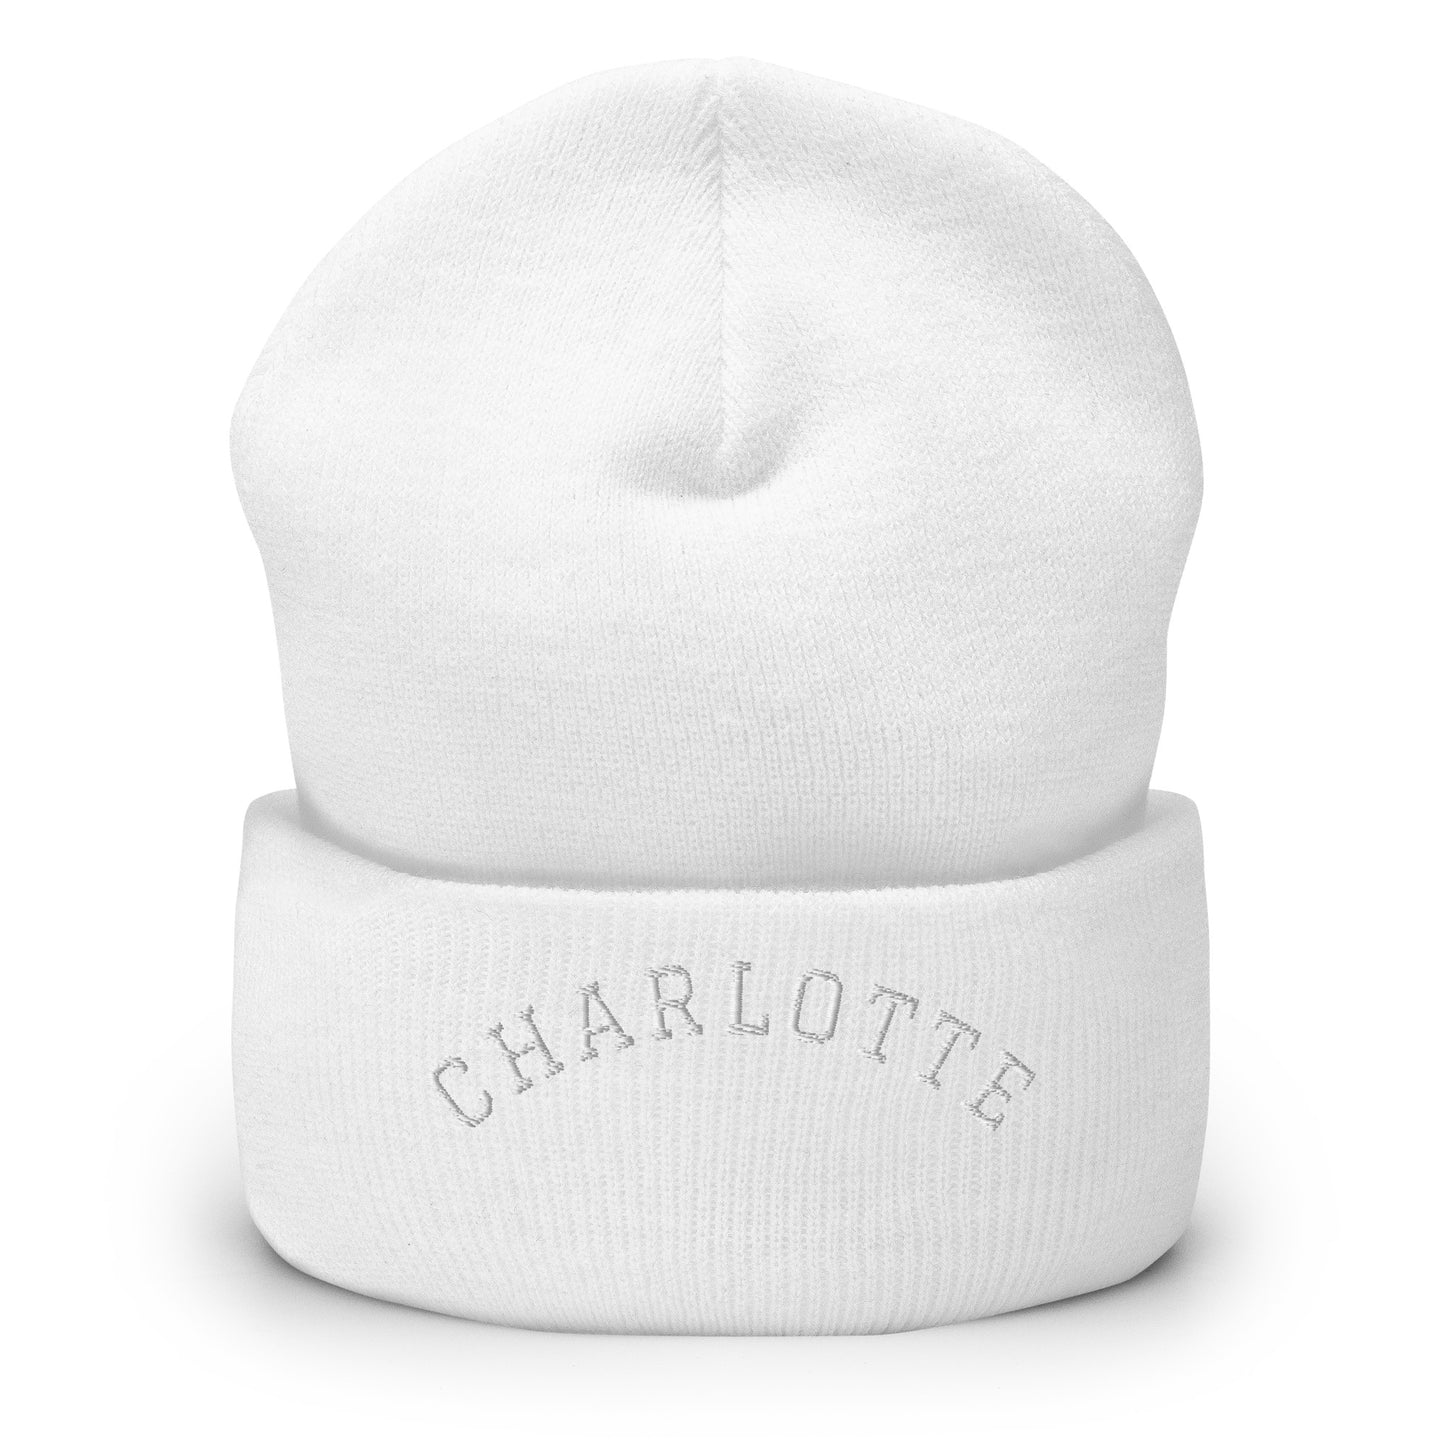 Charlotte Arch Cuffed Beanie Hat